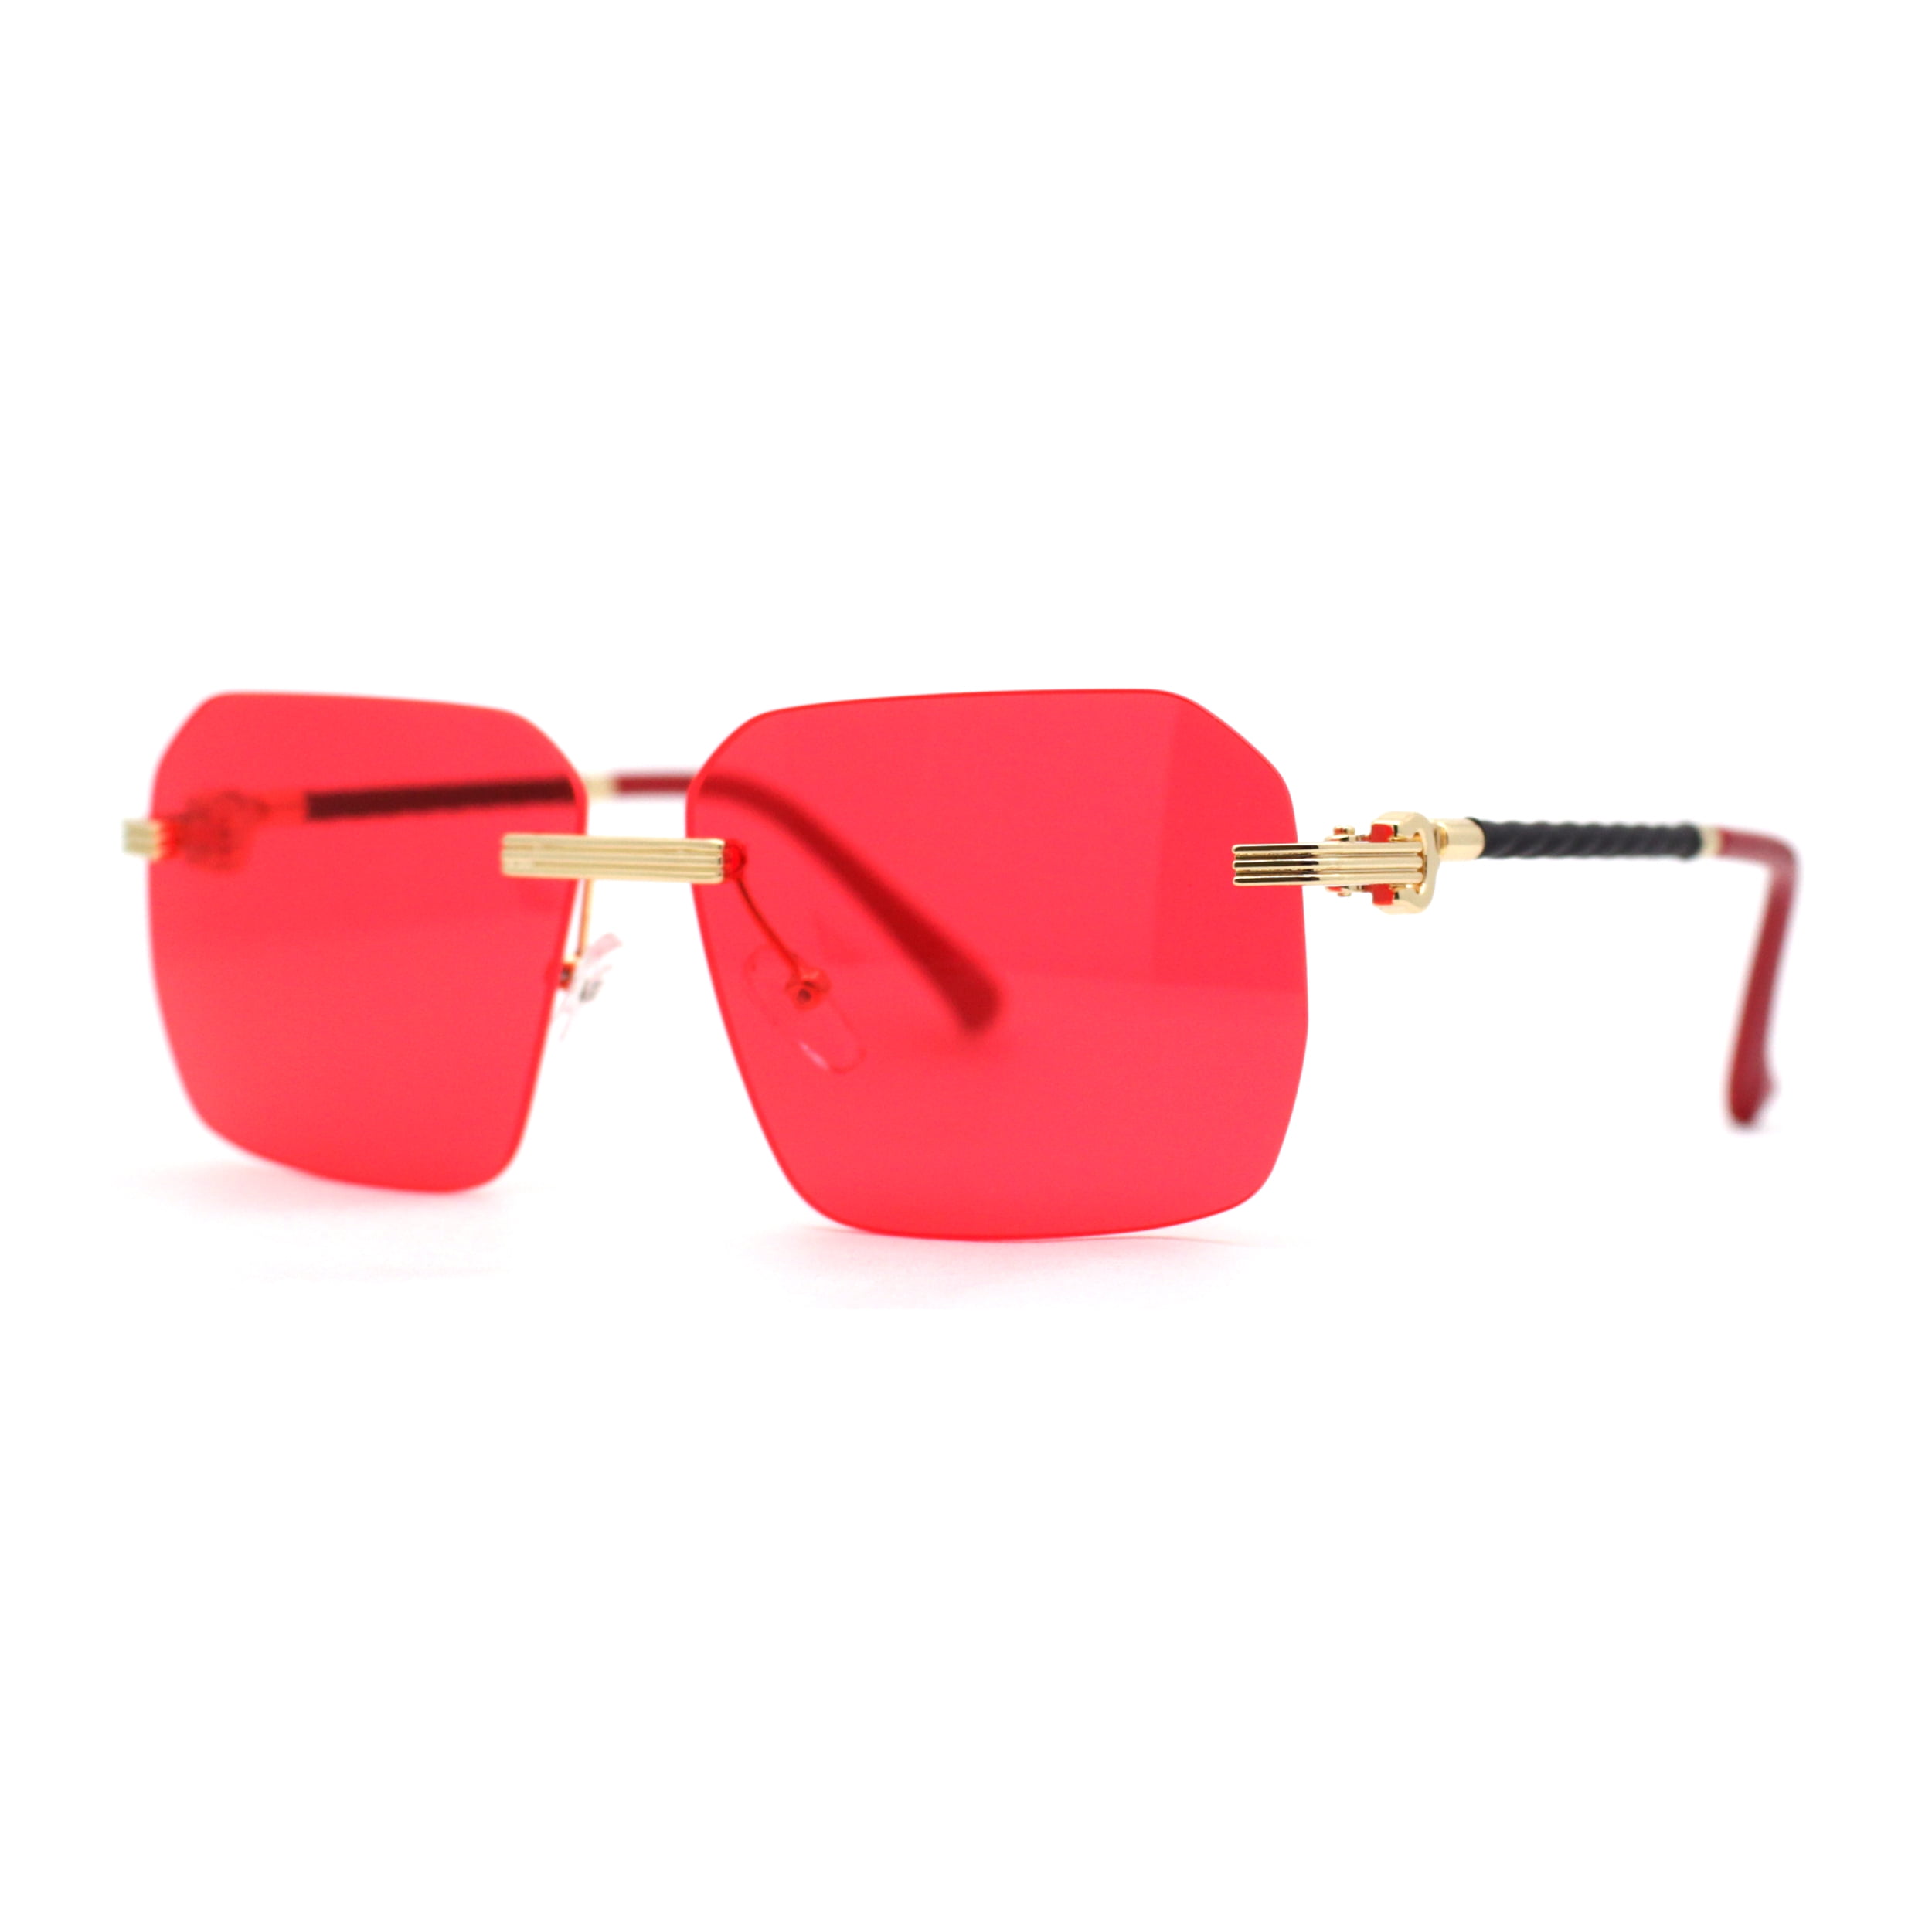 Rimless sunglasses men women gold temples red lenses Pif wear Slim 6